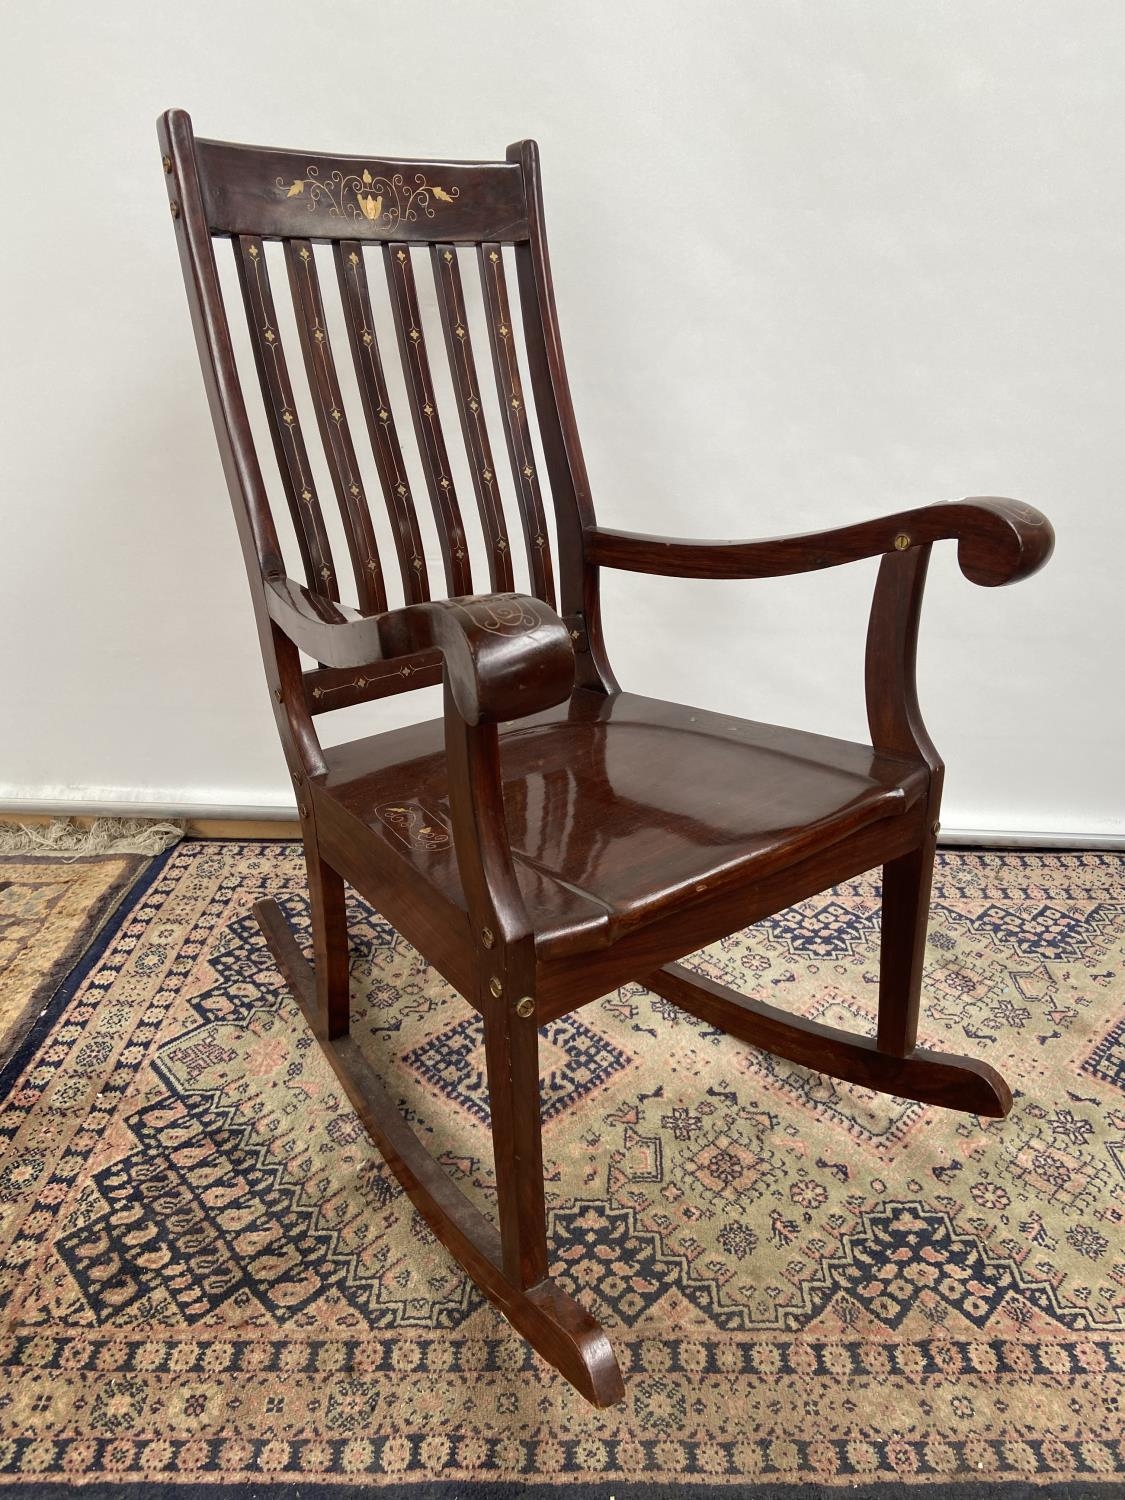 A Hardwood and brass inlaid rocking arm chair. [80x50x40cm] Originally from Saudi Arabia.